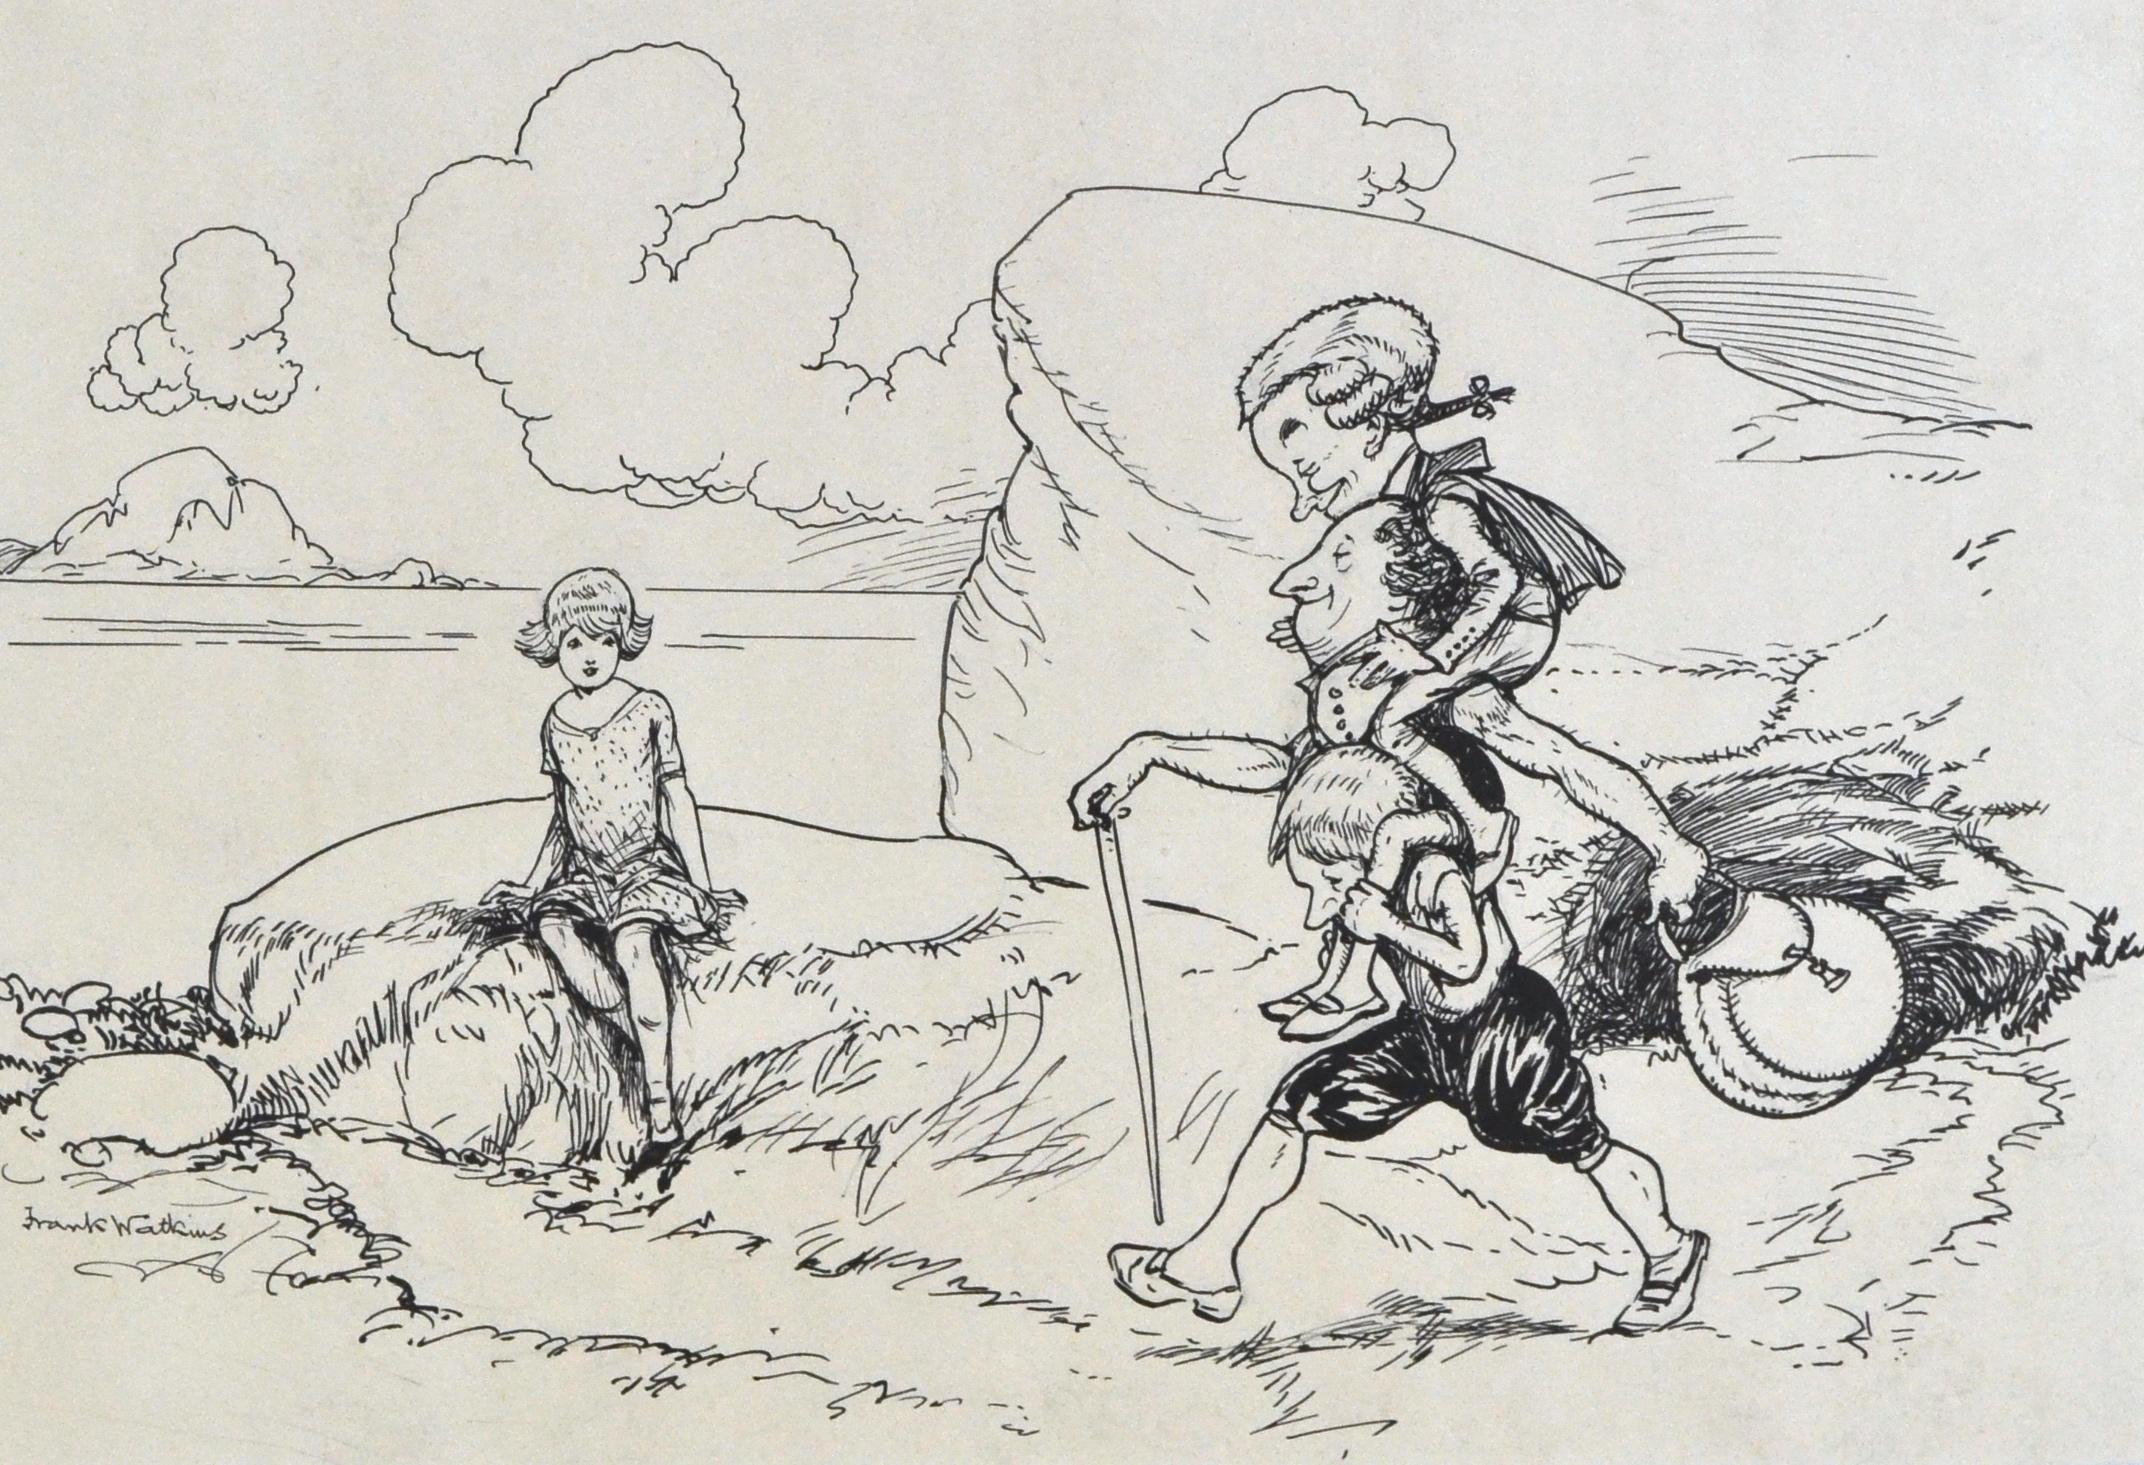 The Travellers - 1920s British Children's book illustration by Frank Watkins